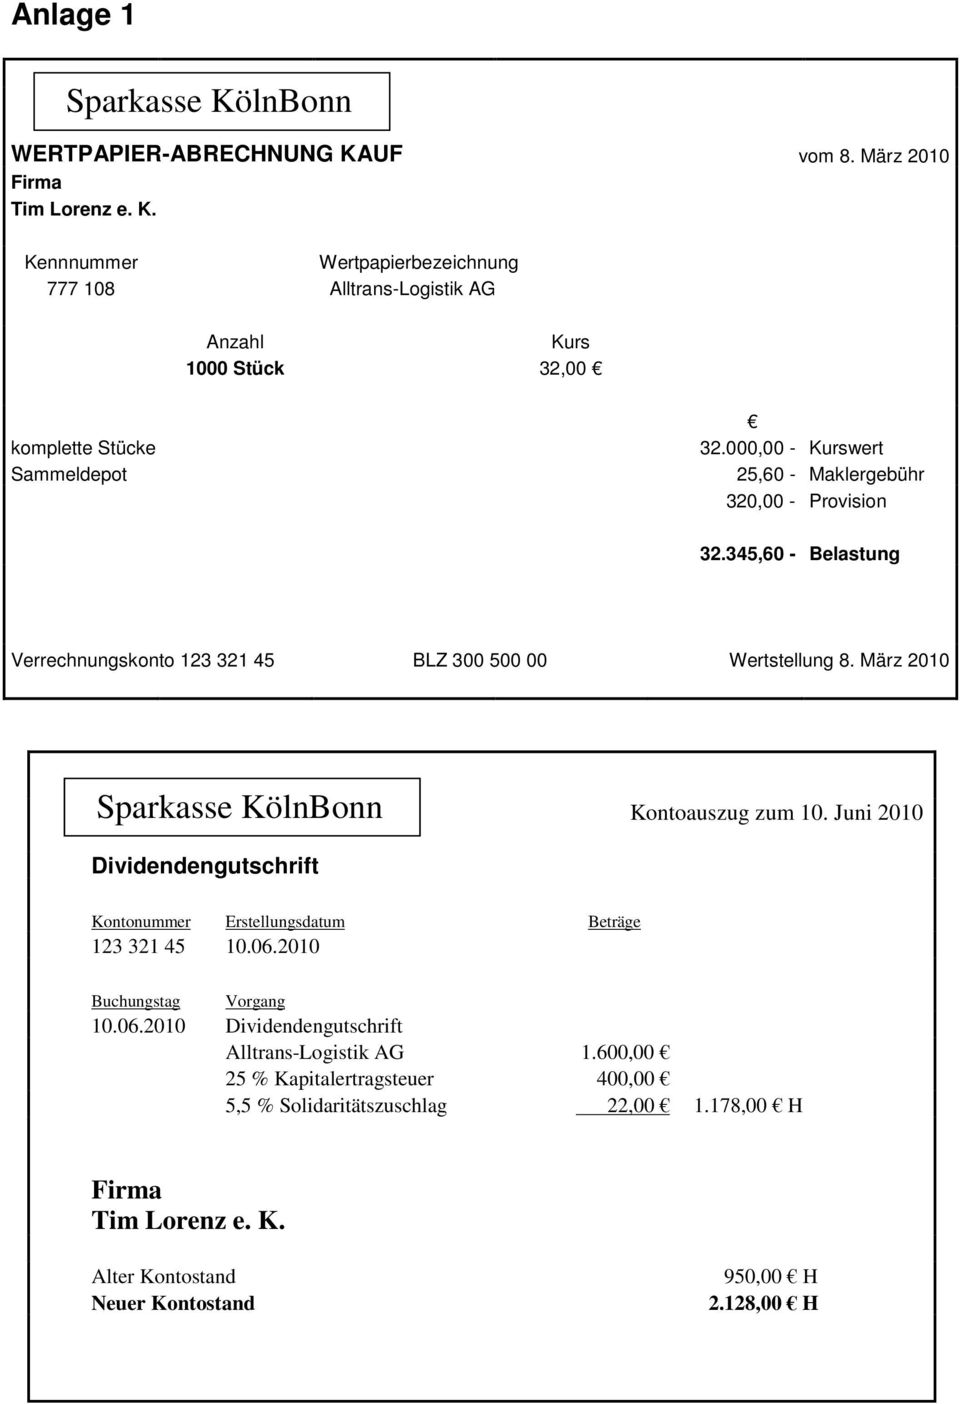 März 2010 Sparkasse KölnBonn Kontoauszug zum 10. Juni 2010 Dividendengutschrift Kontonummer Erstellungsdatum Beträge 123 321 45 10.06.2010 Buchungstag Vorgang 10.06.2010 Dividendengutschrift Alltrans-Logistik AG 1.